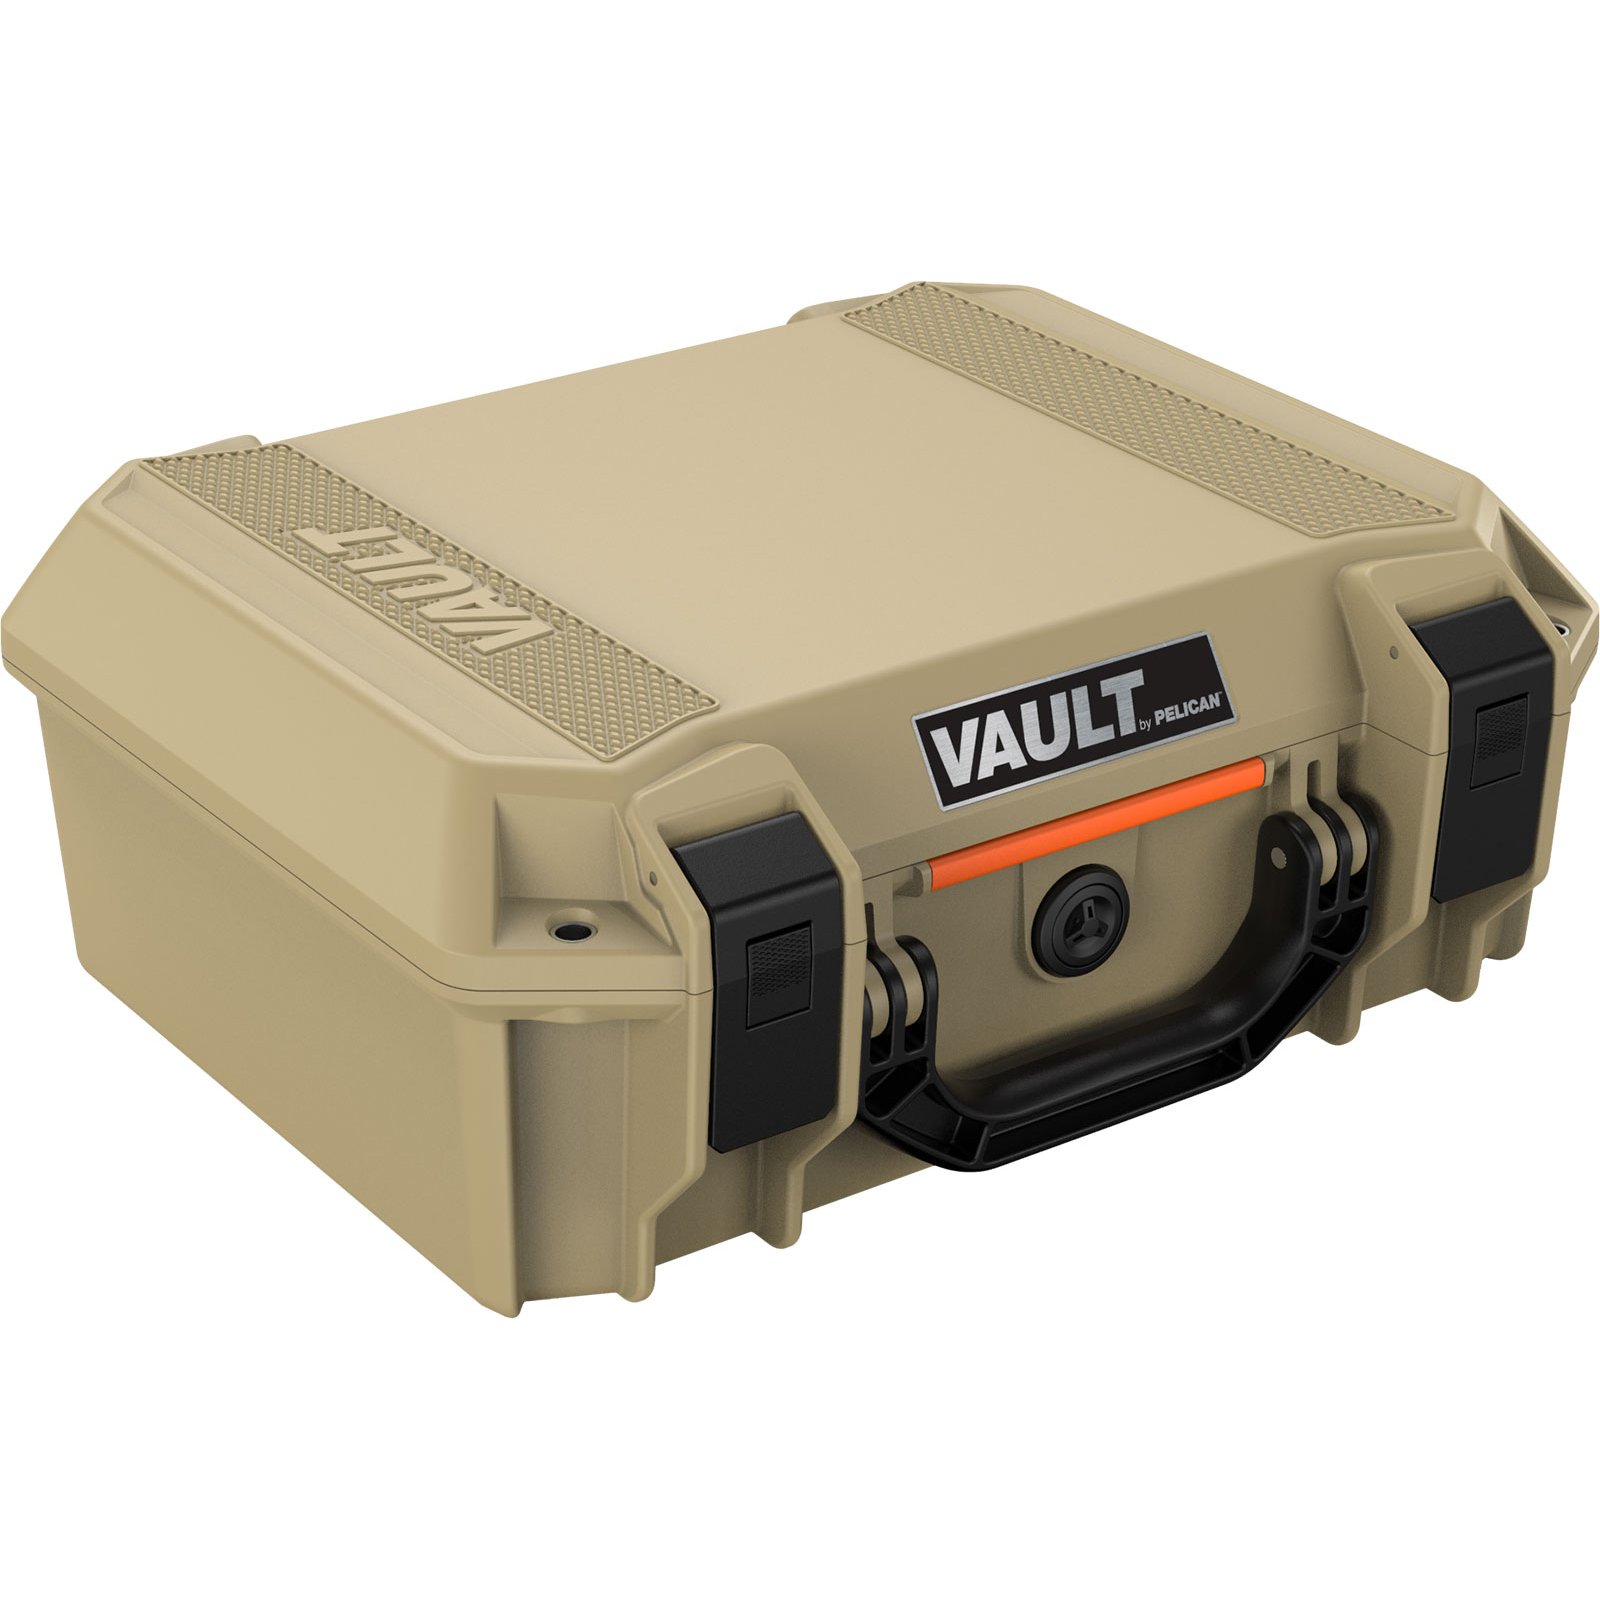 V200 Vault Equipment Case